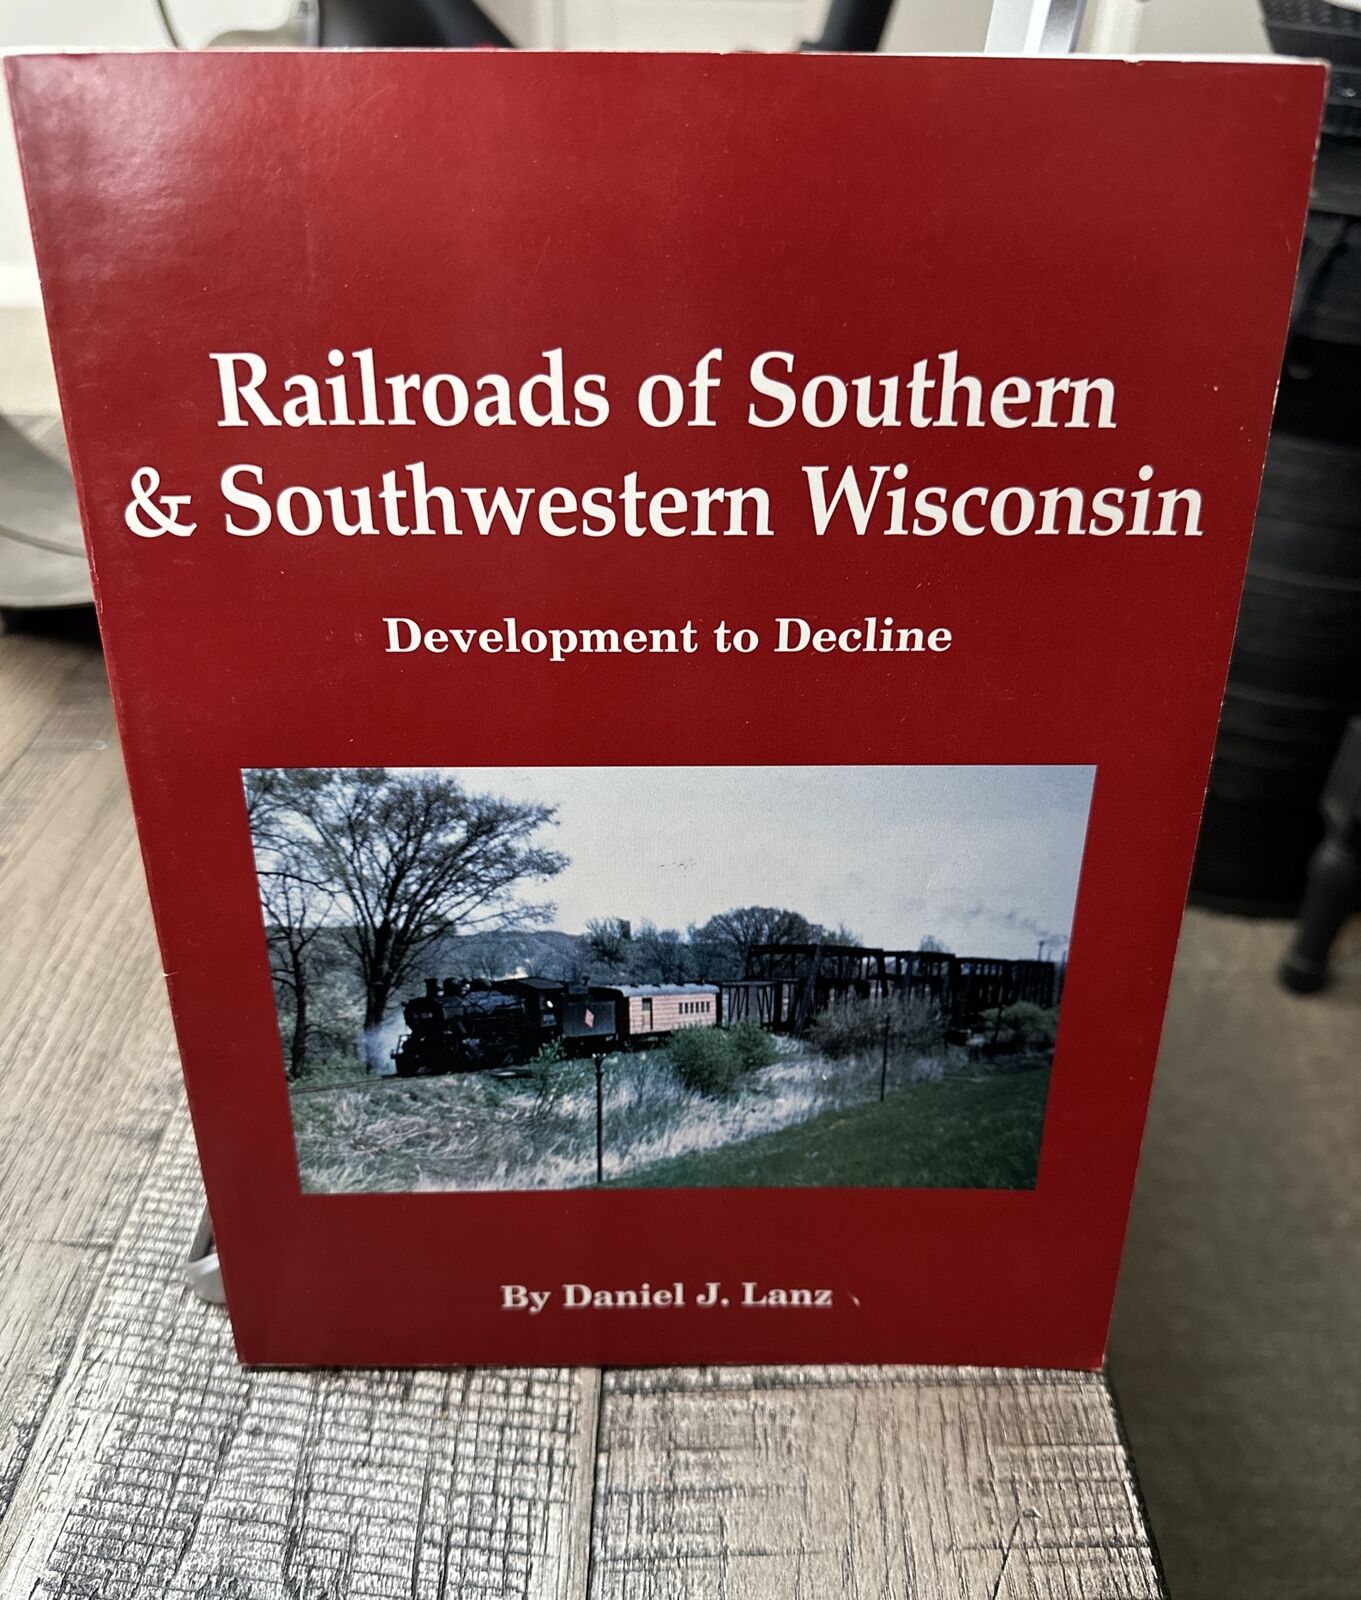 Railroads of Southern & Southwestern Wisconsin by Daniel Lanz SC 1985